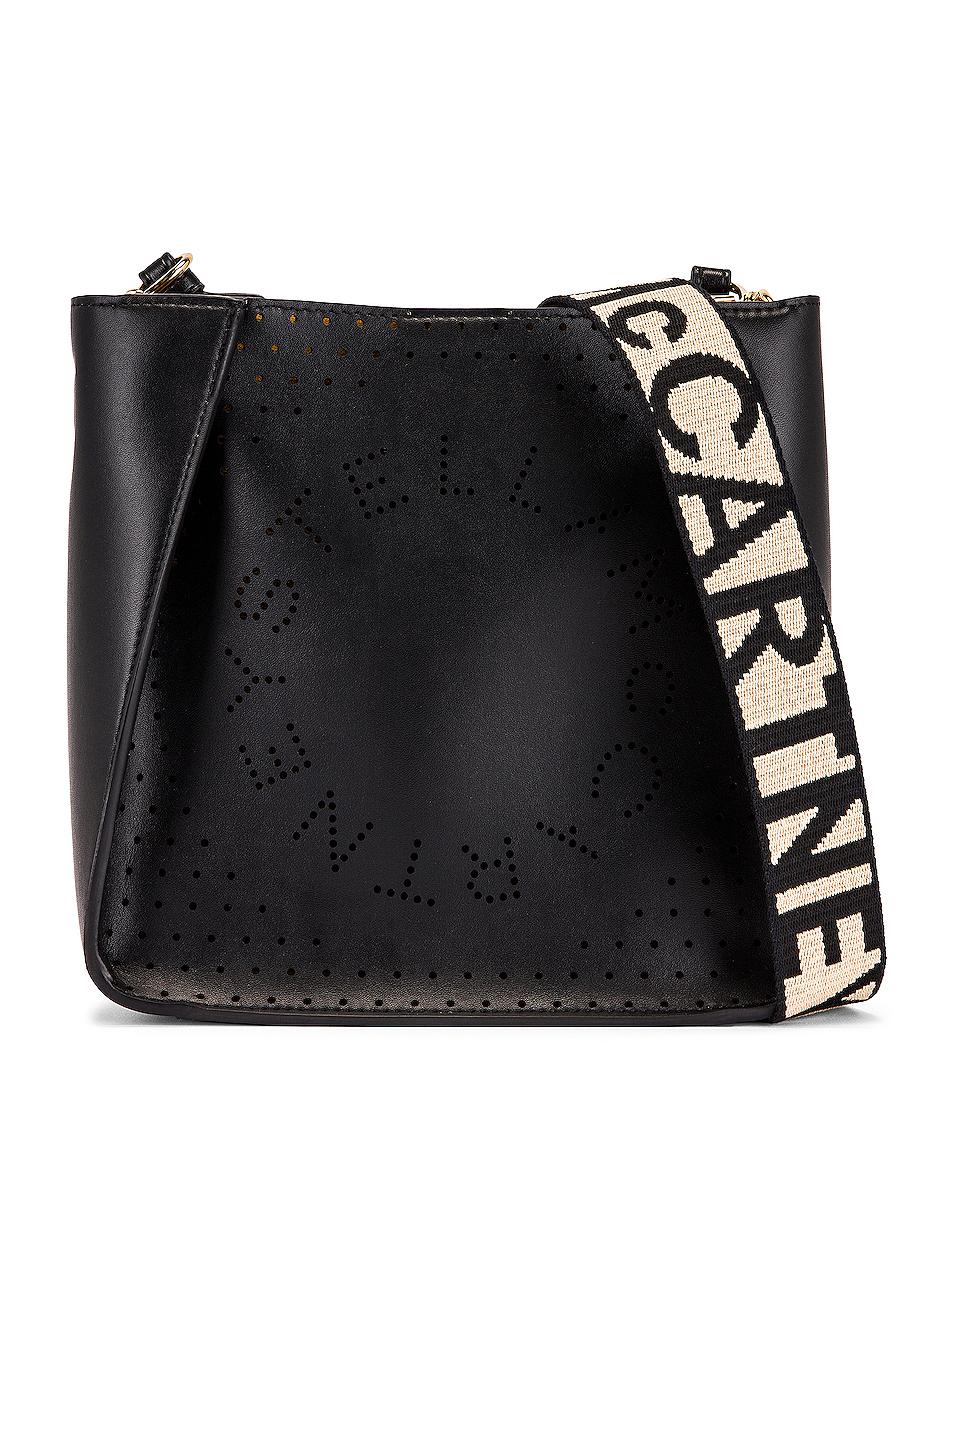 Stella McCartney Leather Mini Logo Crossbody Bag in Black - Save 55% - Lyst